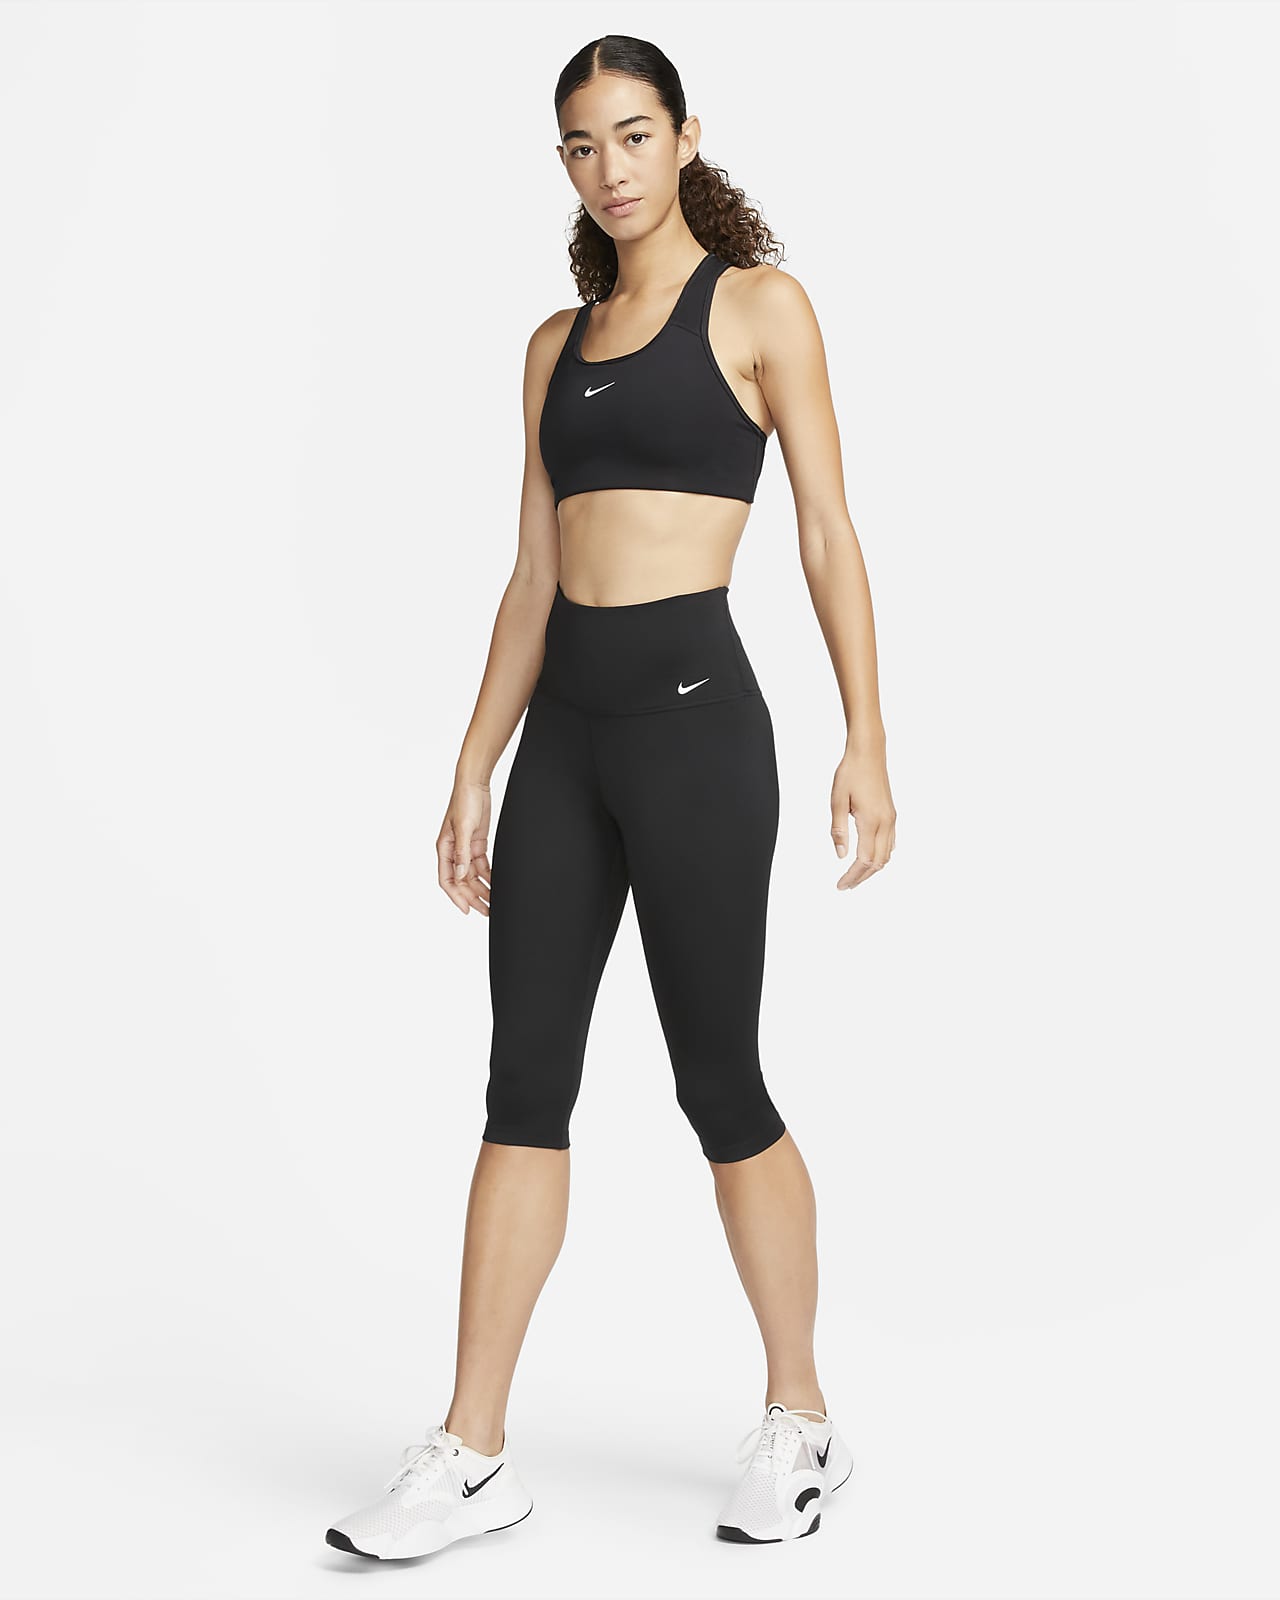 Nike Women's Running Capri Pants